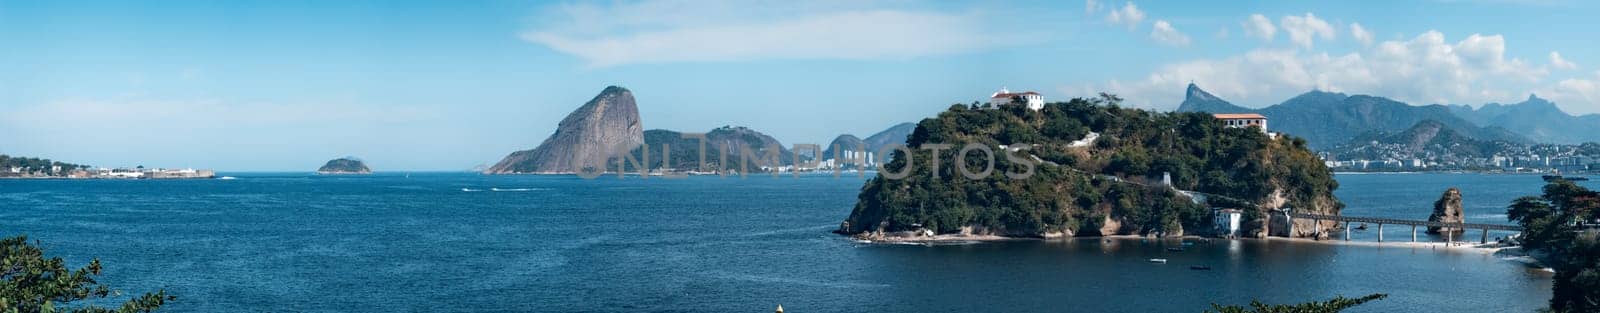 Tropical coastal scene with clear skies in Rio de Janeiro Bay